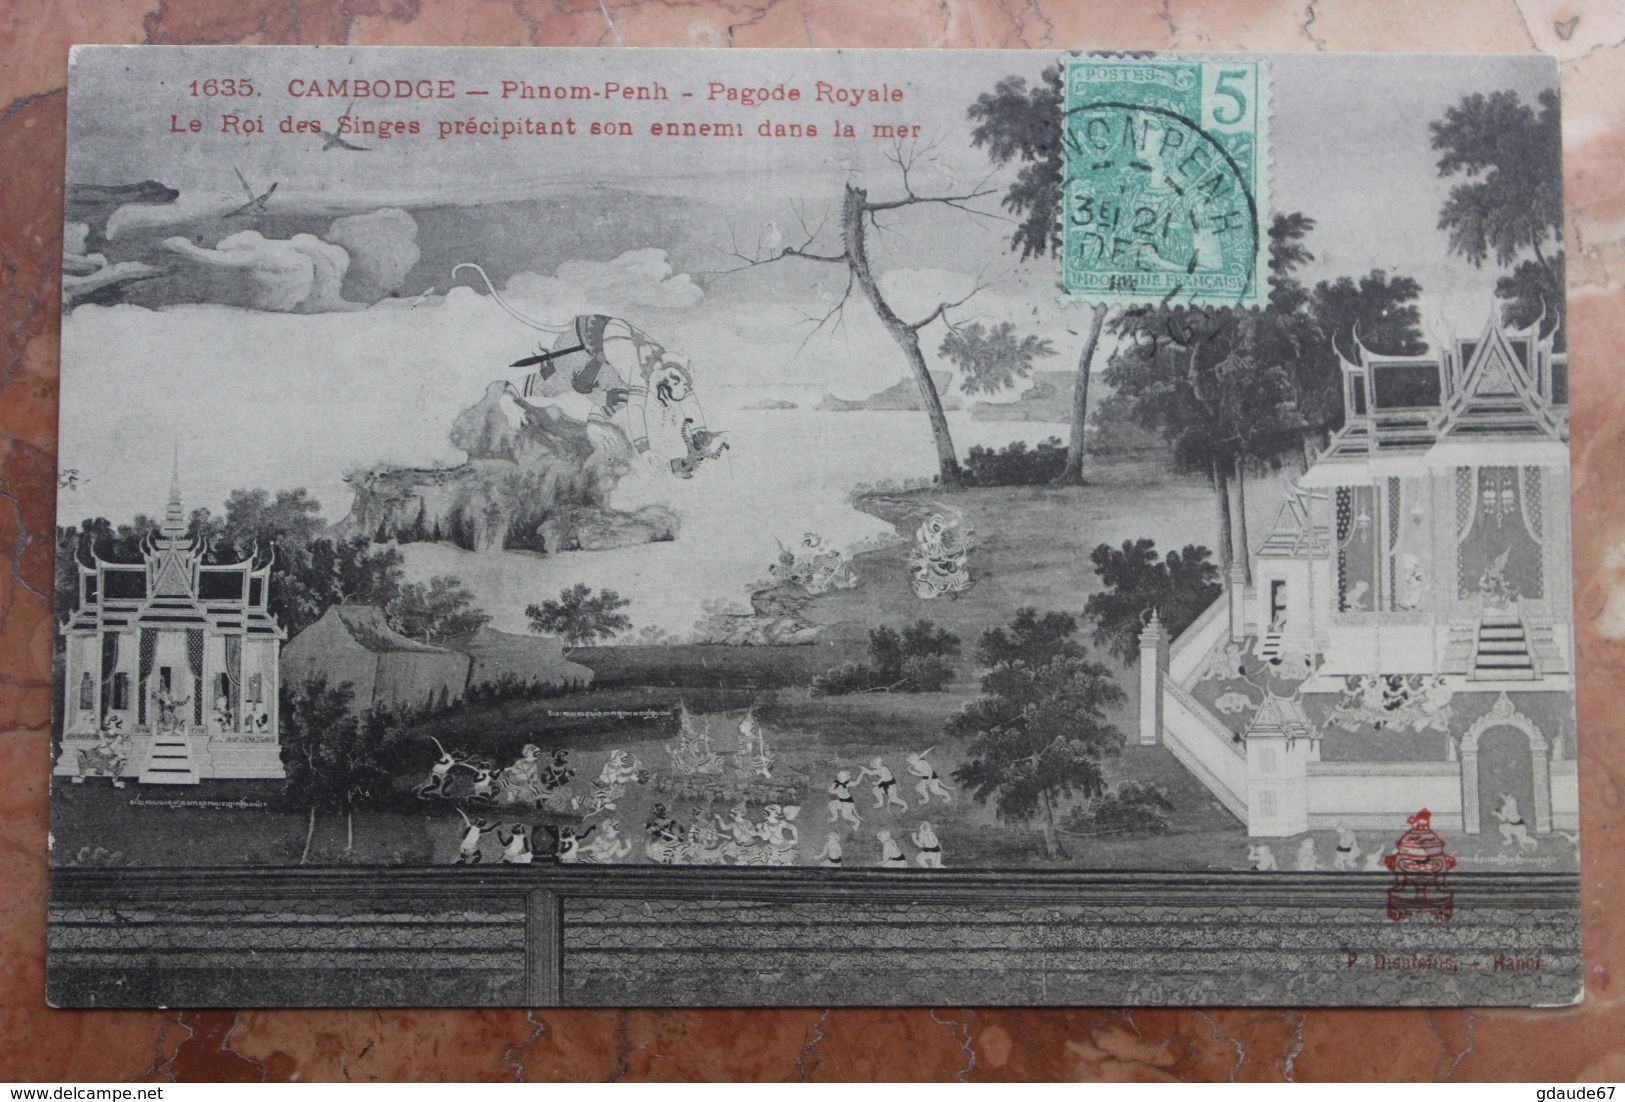 PHNOM-PENH (CAMBODGE) - 1635. PAGODE ROYALE - LE ROI DES SINGES PRECIPITANT SON ENNEMI DANS LA MER - Cambogia